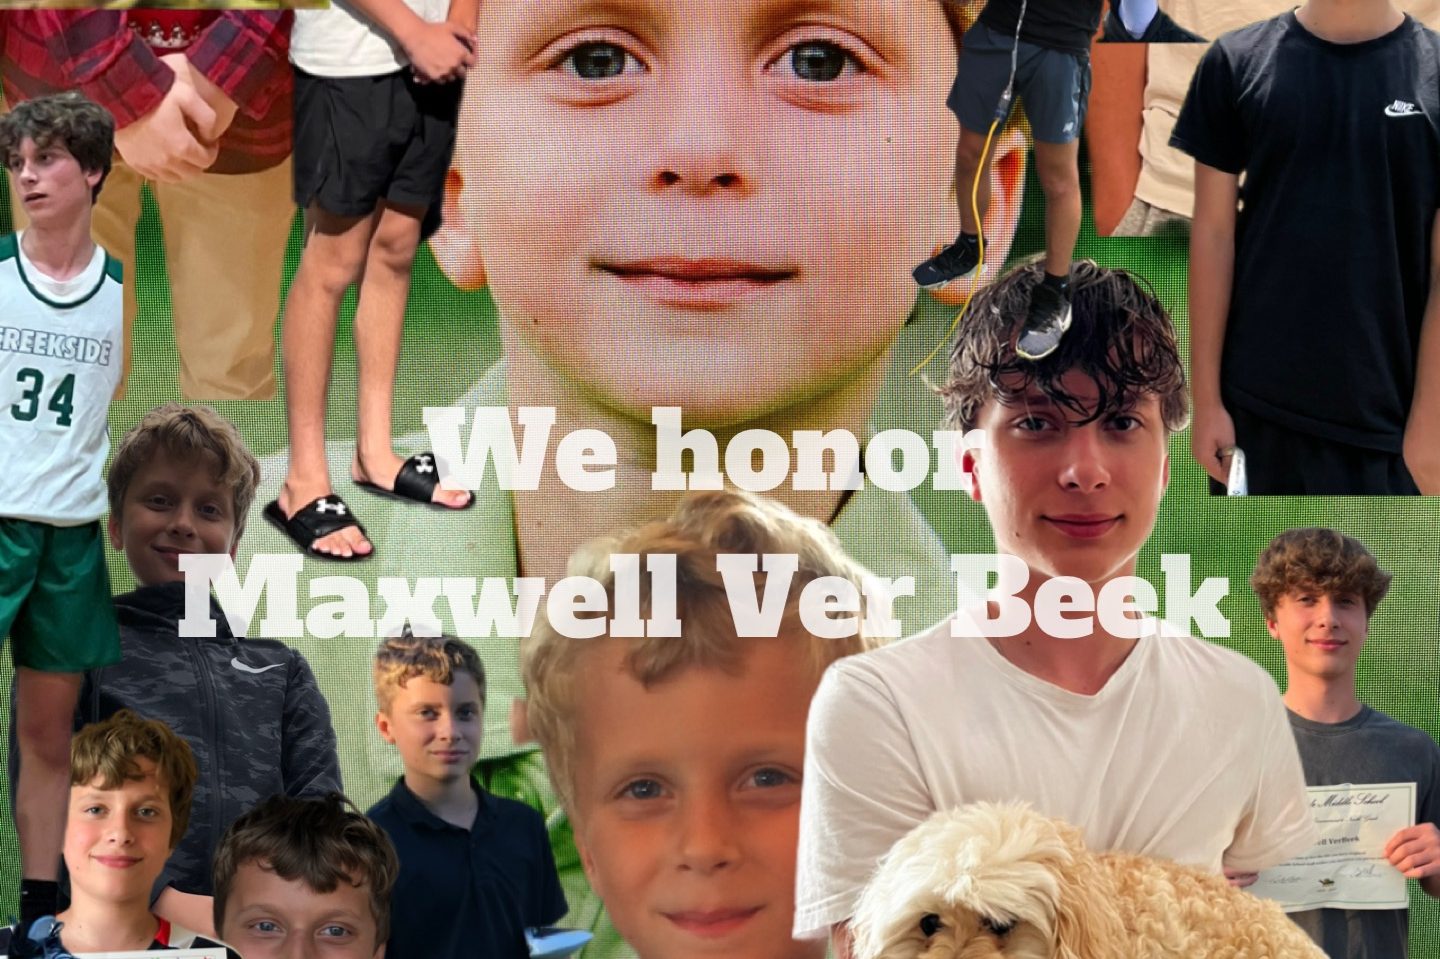 Hudson Ver Beek and Maxwell Ver Beek